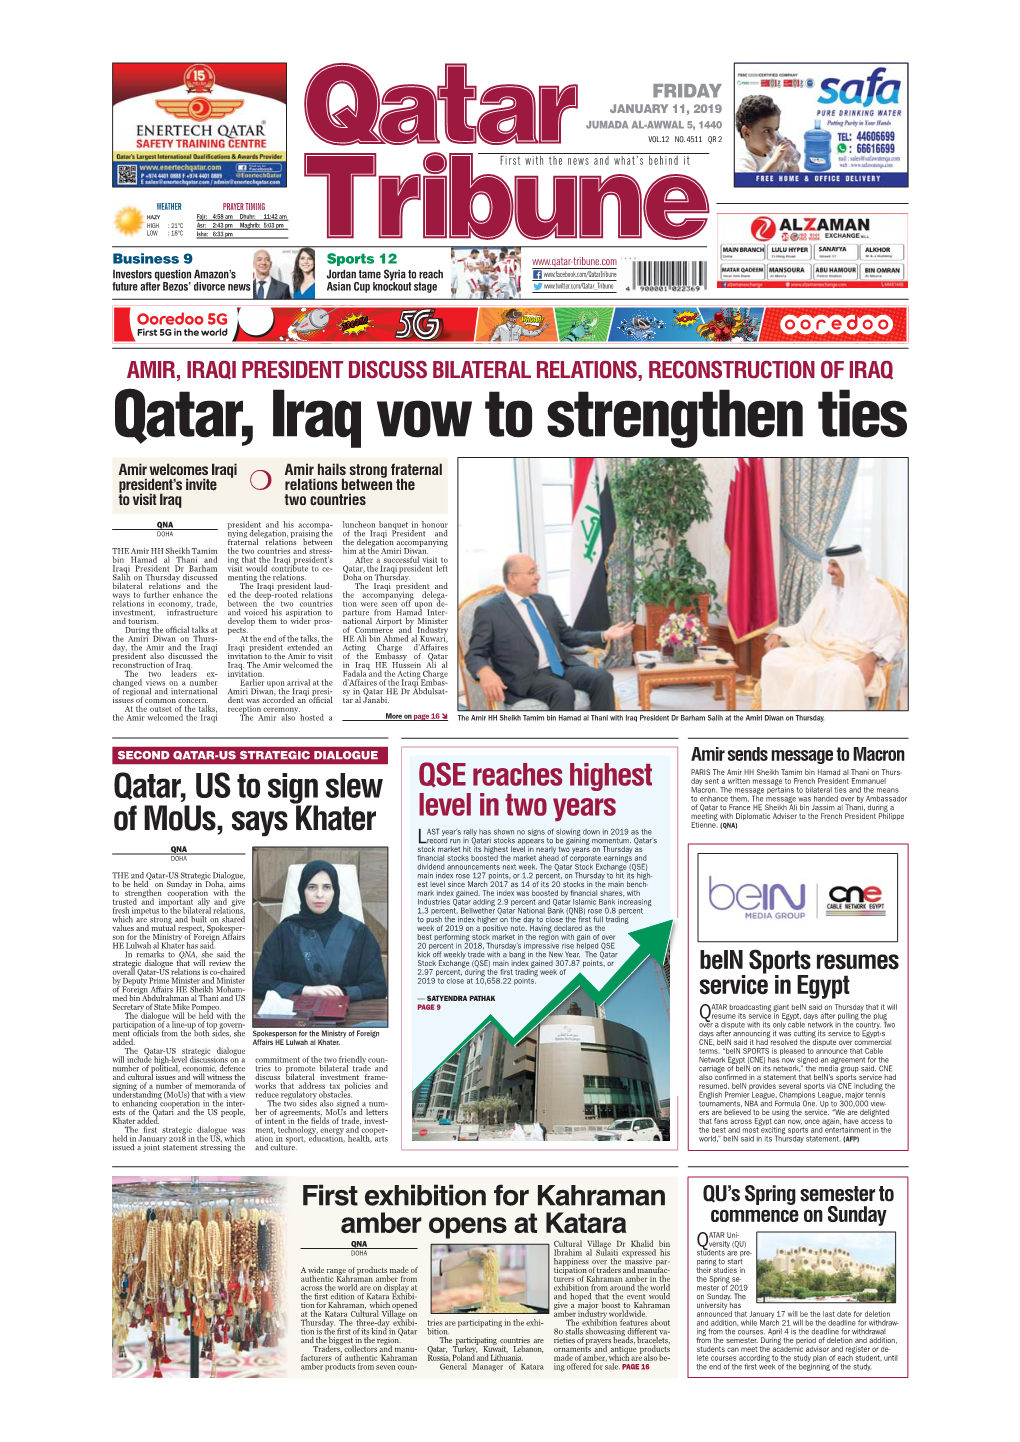 Qatar, Iraq Vow to Strengthen Ties